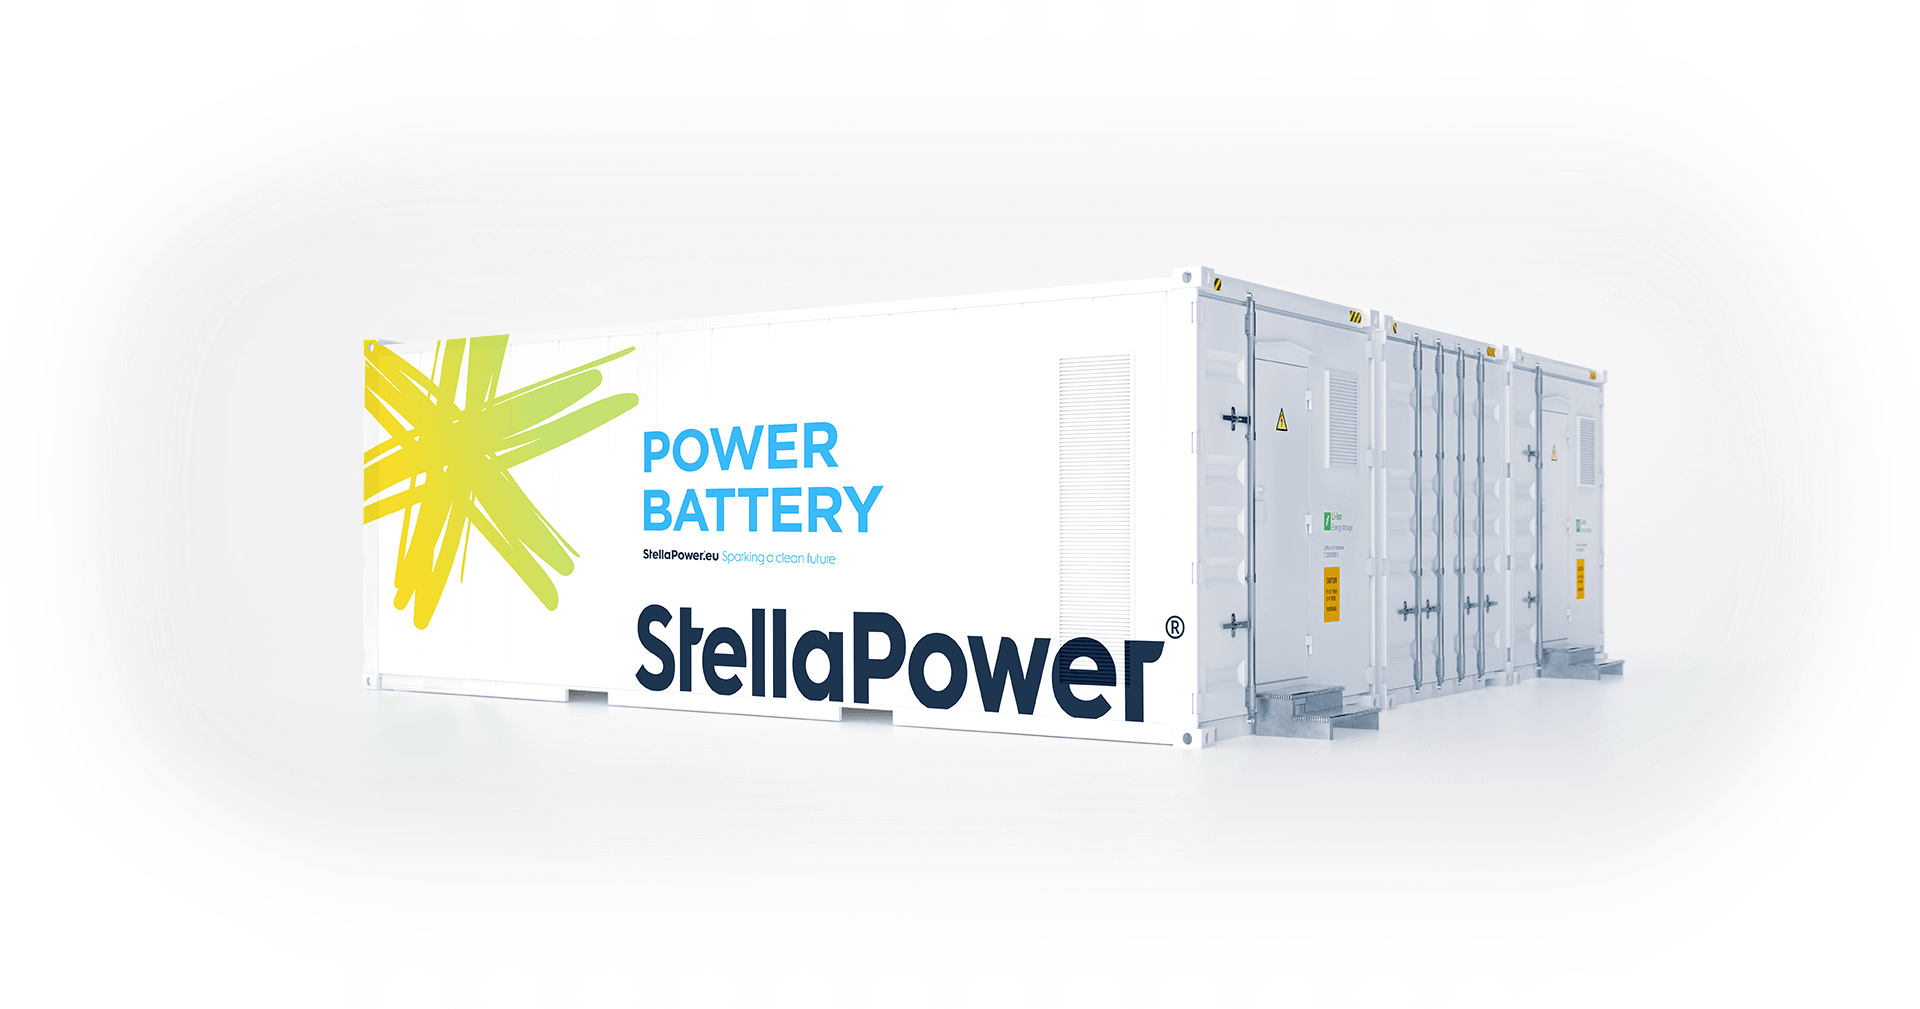 StellaPower - Power battery